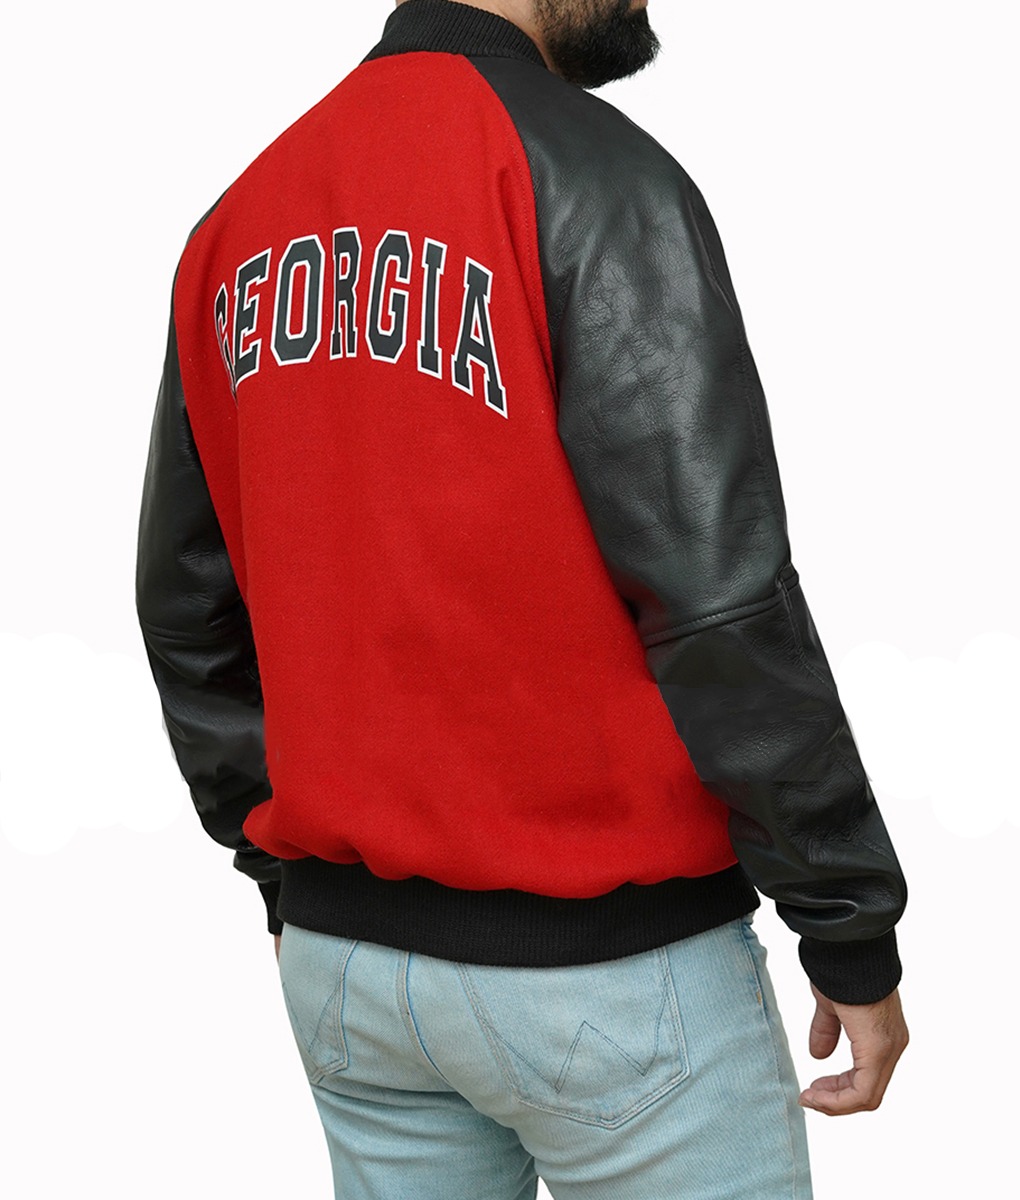 Georgia Bulldogs Red Varsity Jacket (1)